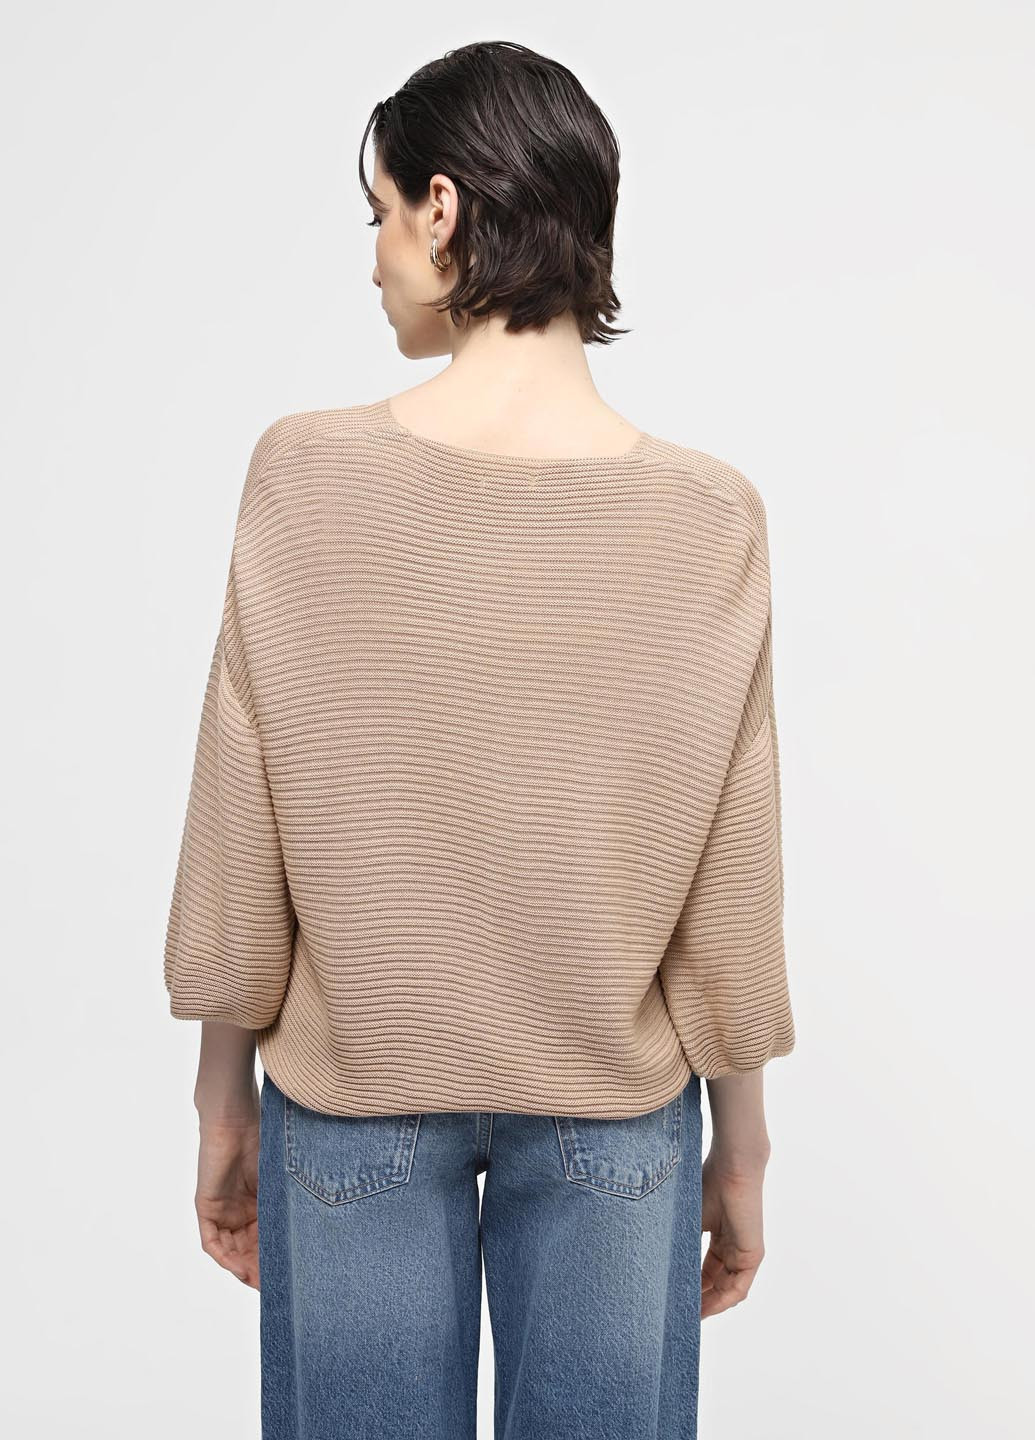 Бежевый демисезонный пуловер пуловер Sewel